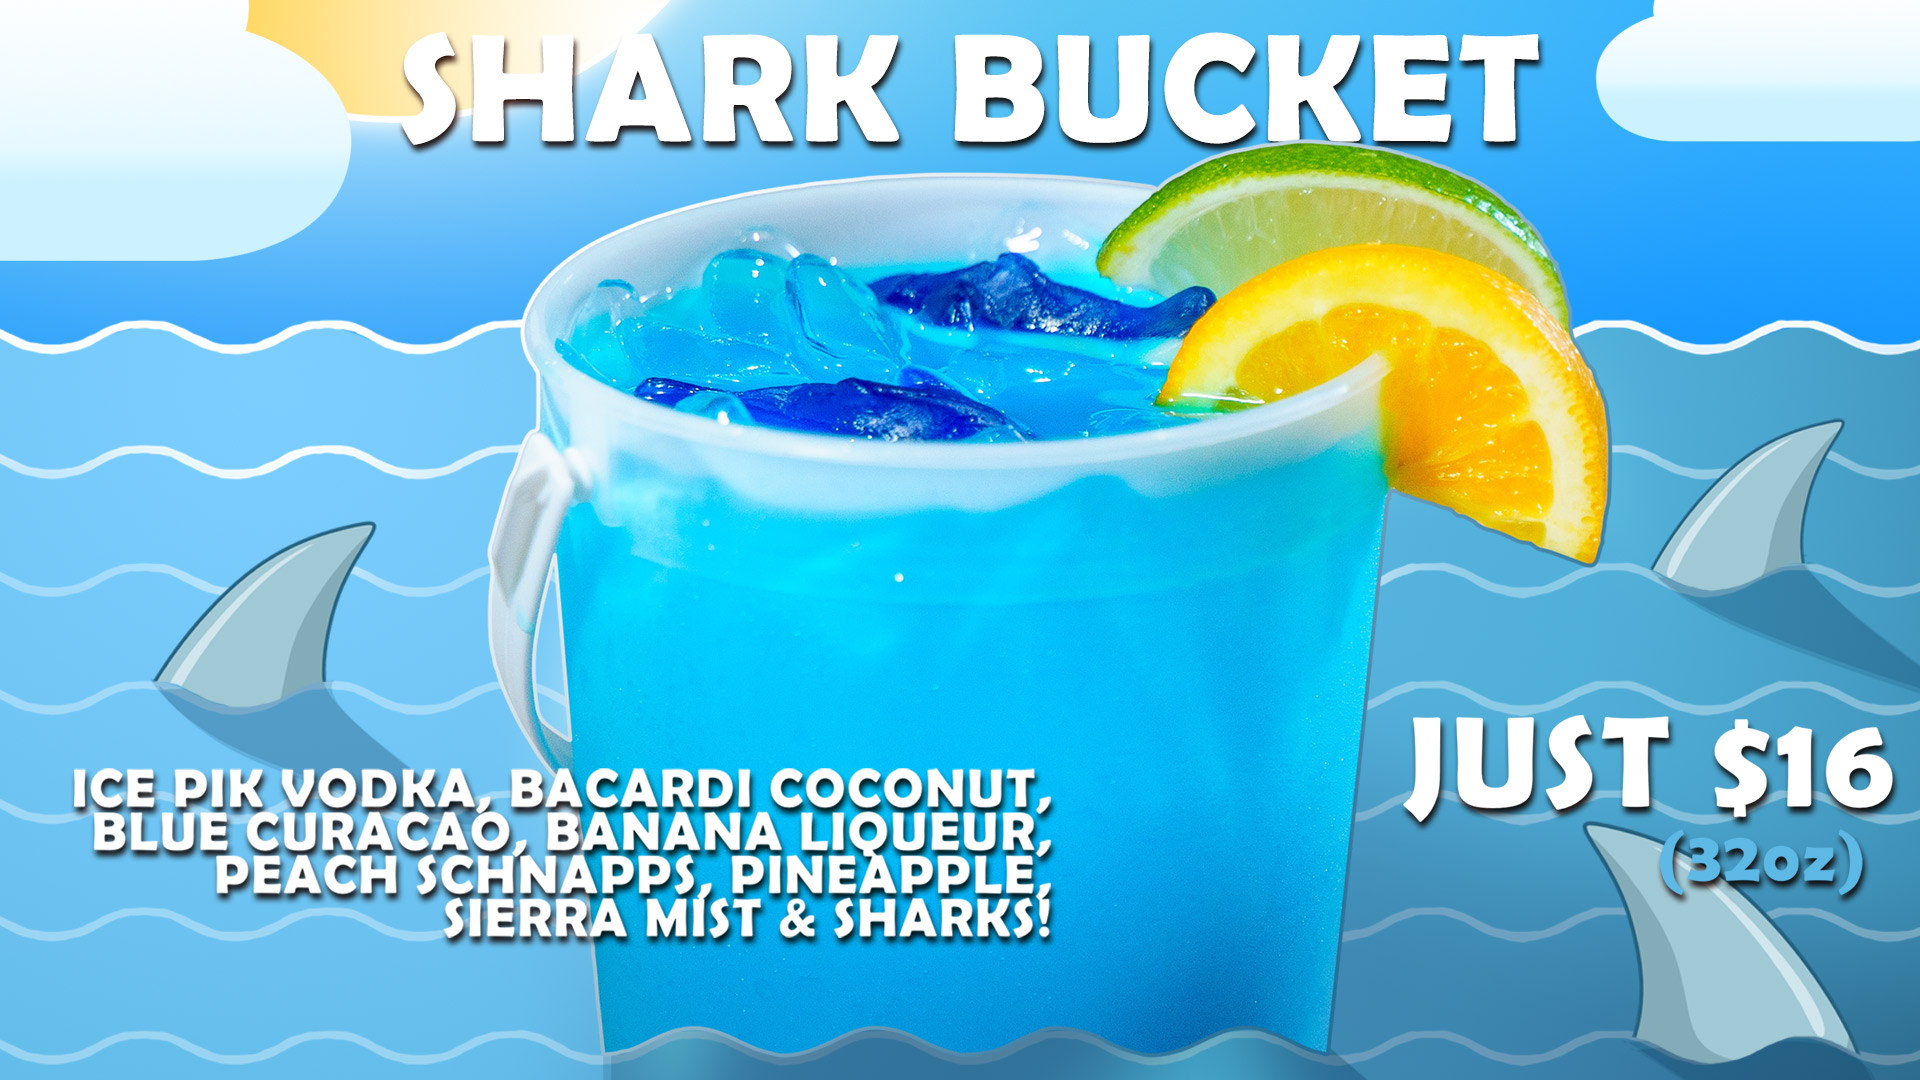 Shark Bucket image